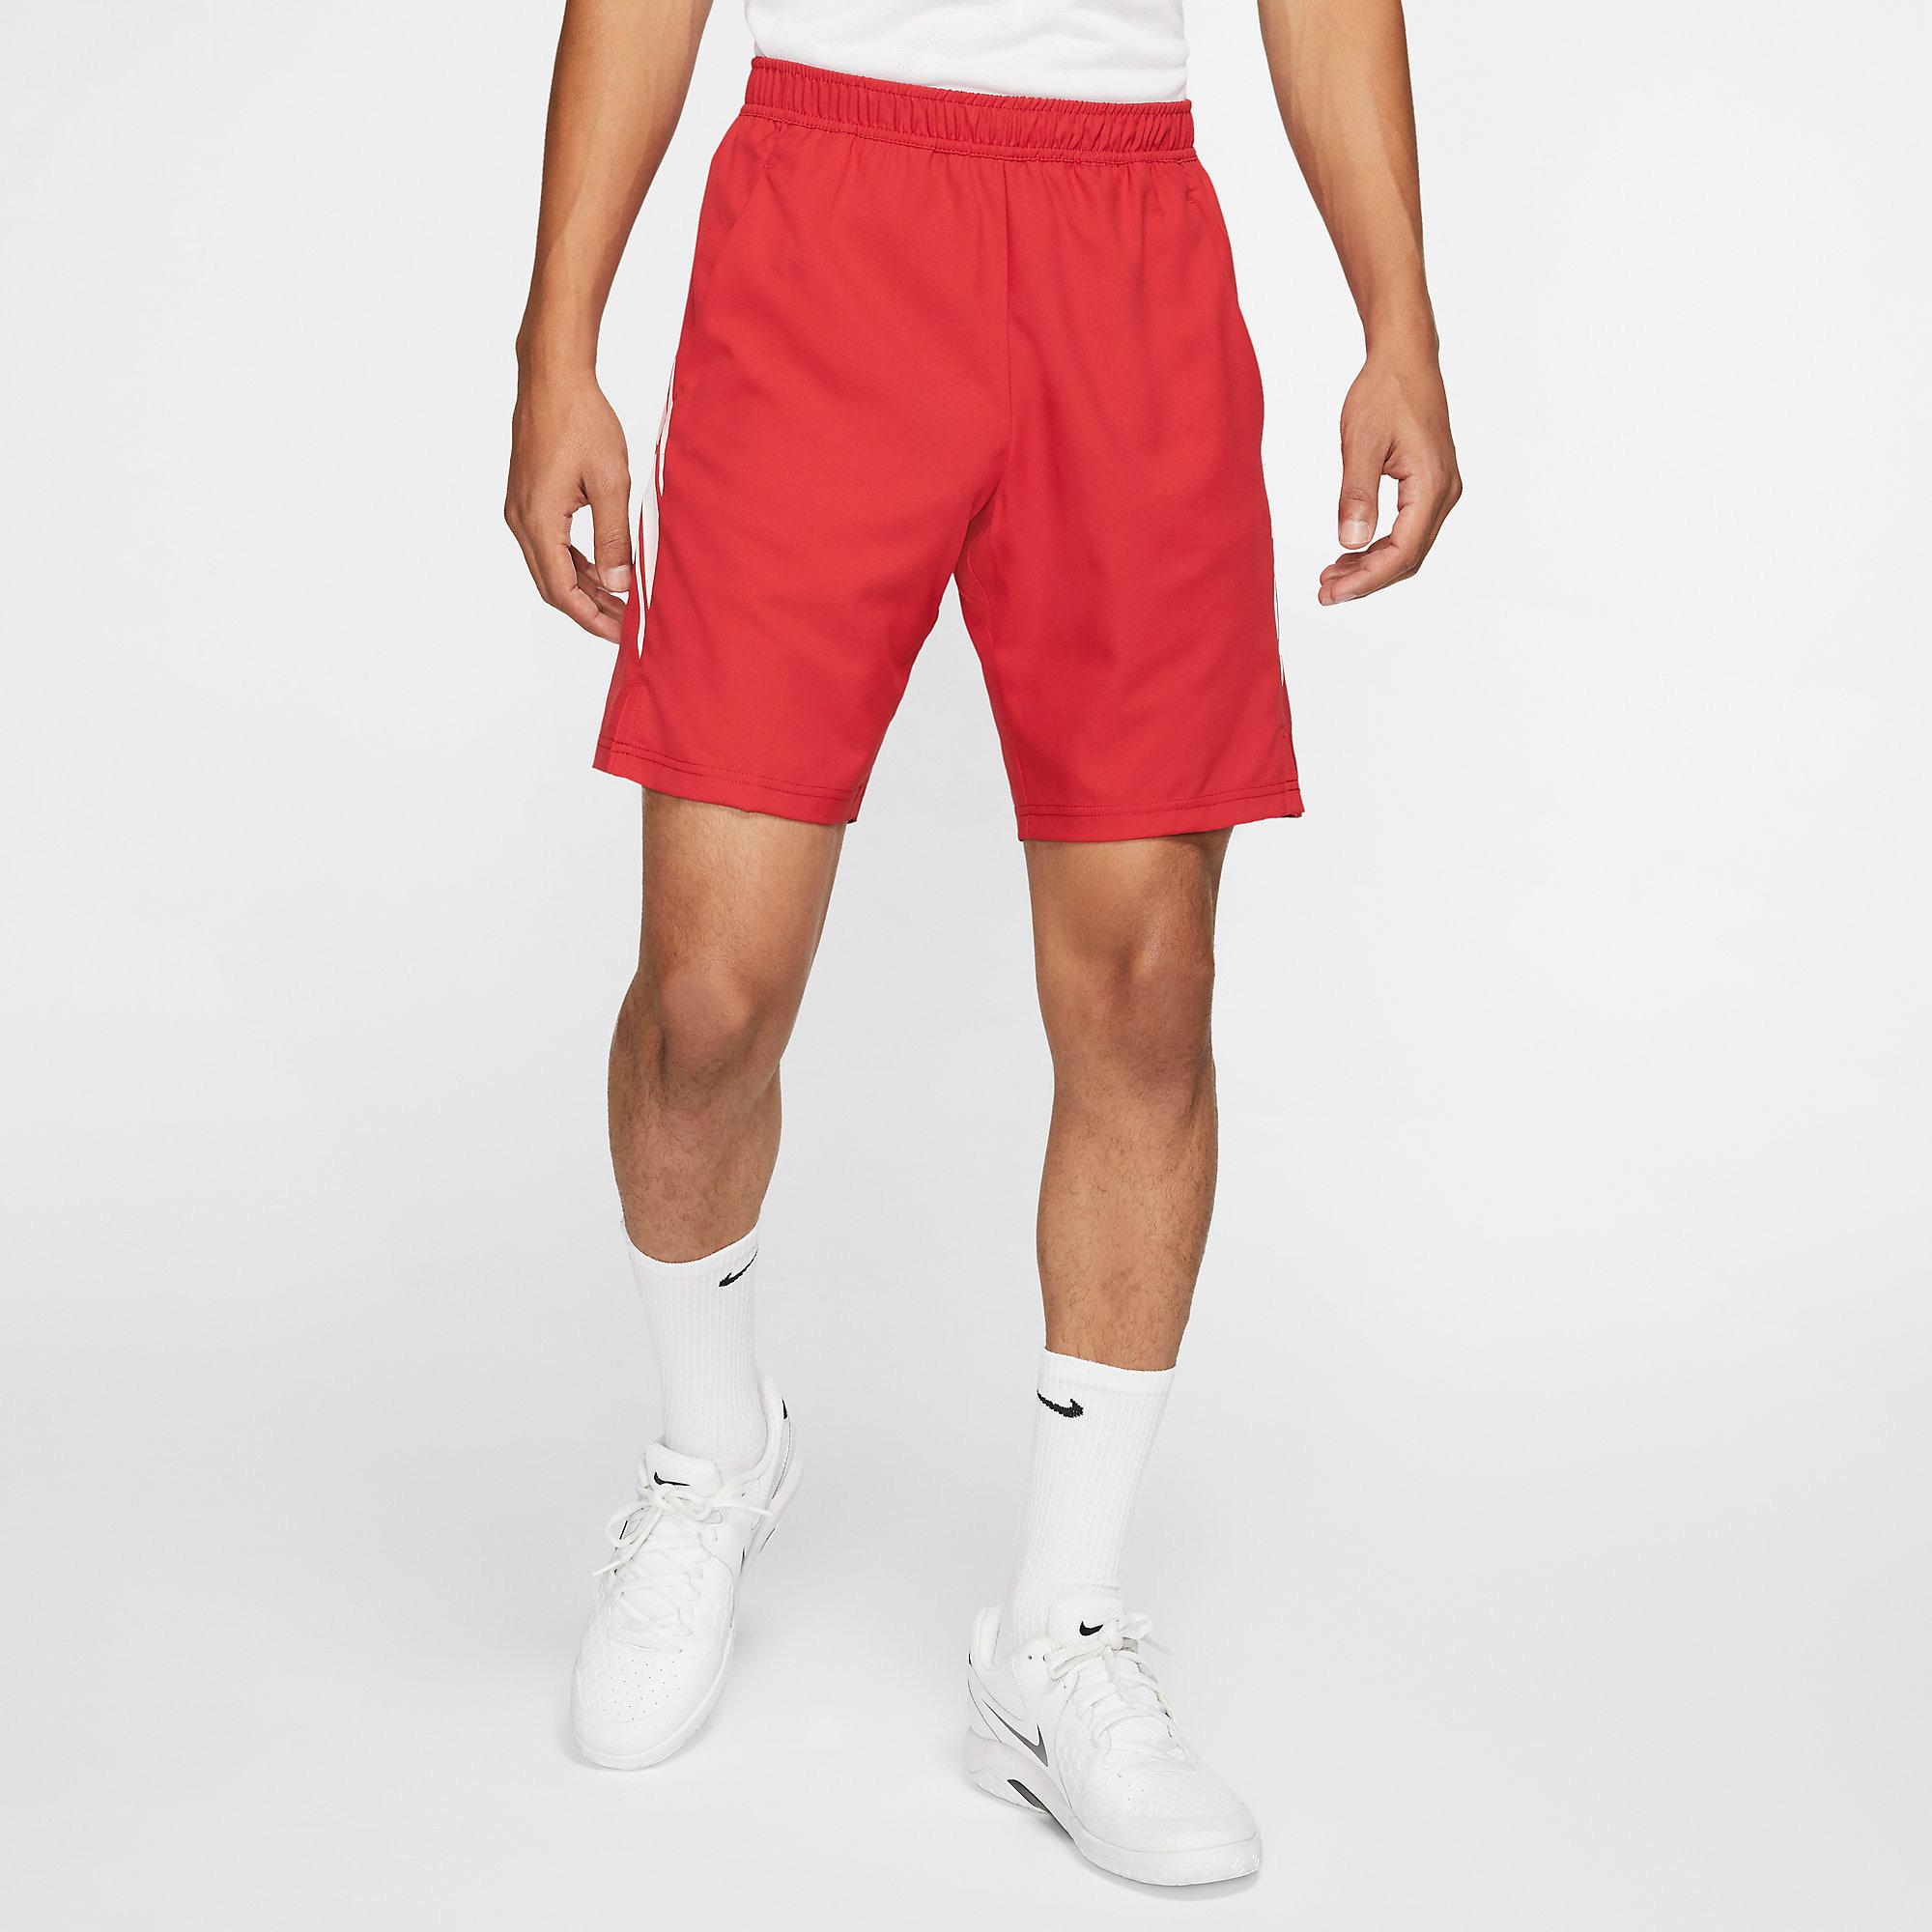 Nike Mens Dri-FIT 9 Inch Tennis Shorts 